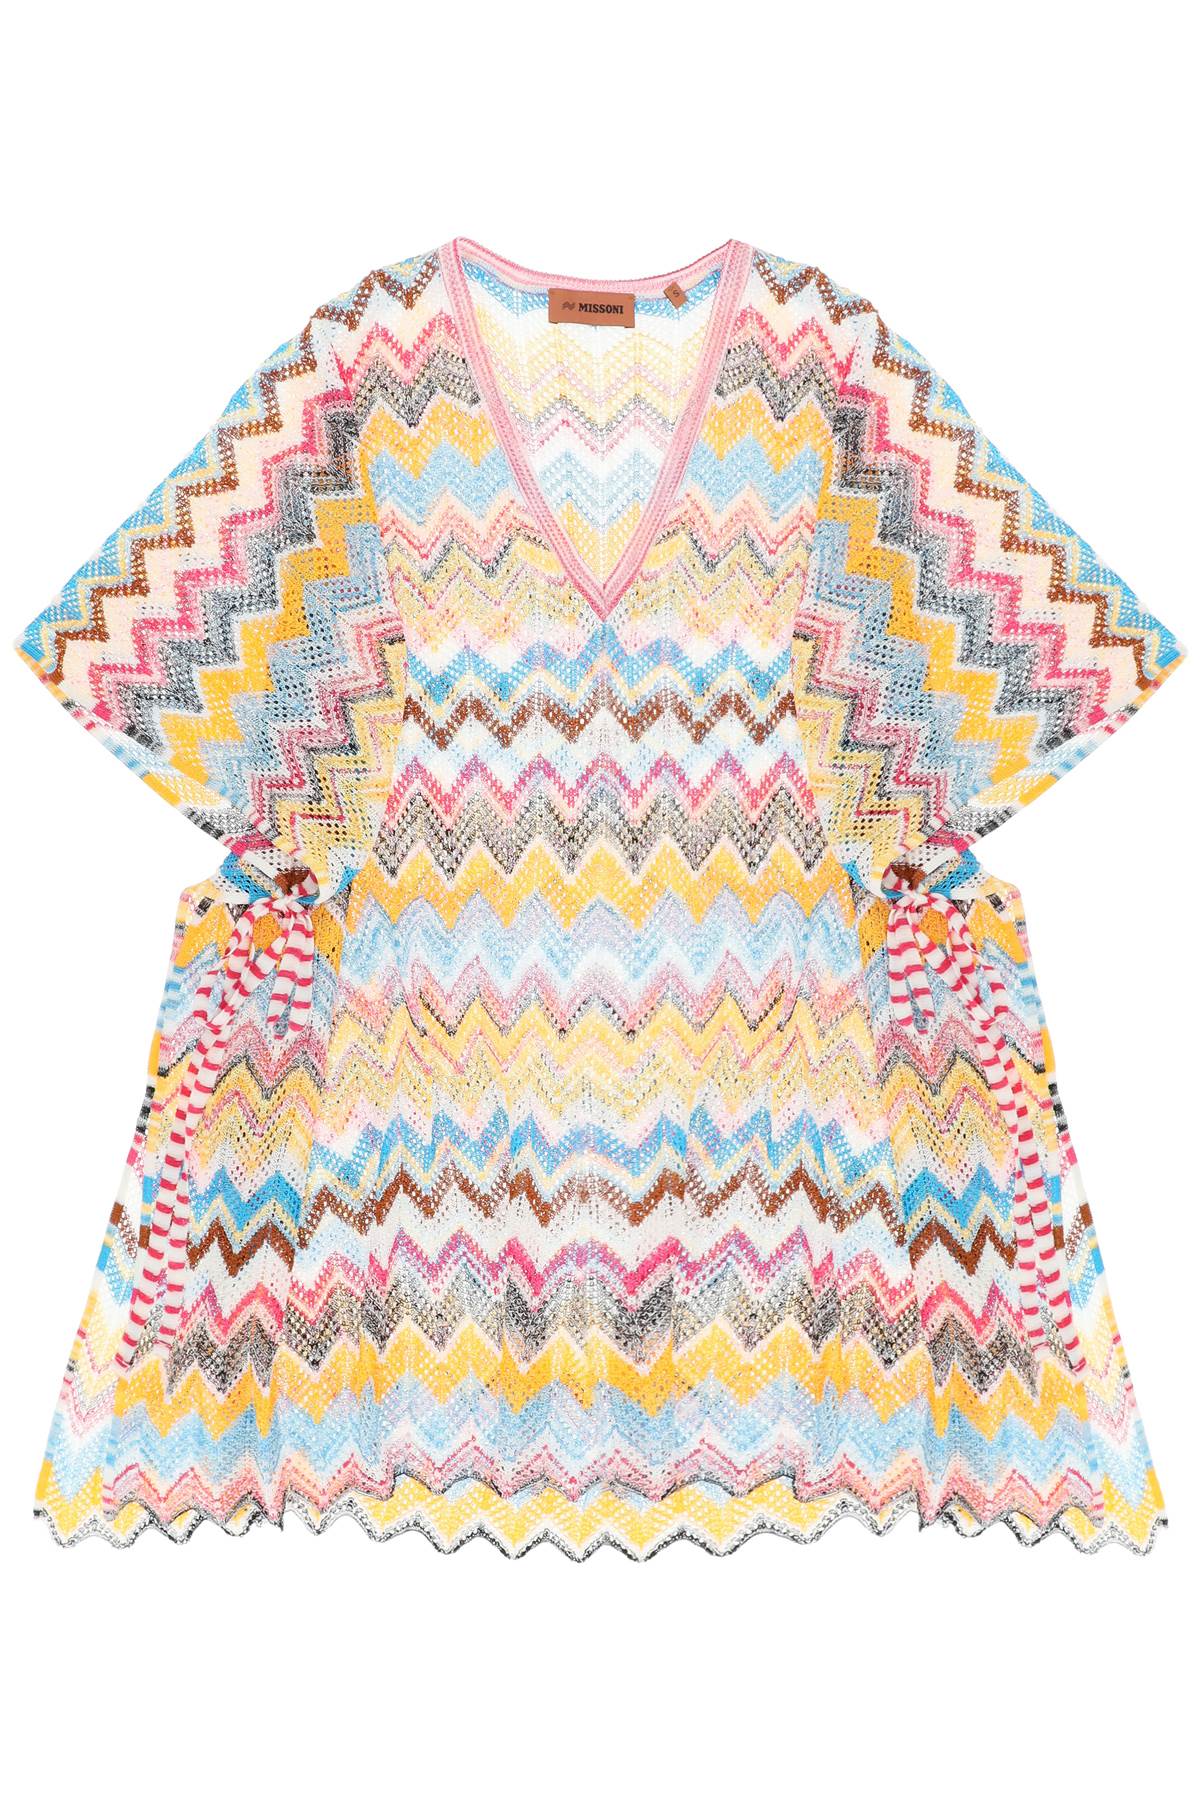 Missoni multicolor knit poncho cover-up-0